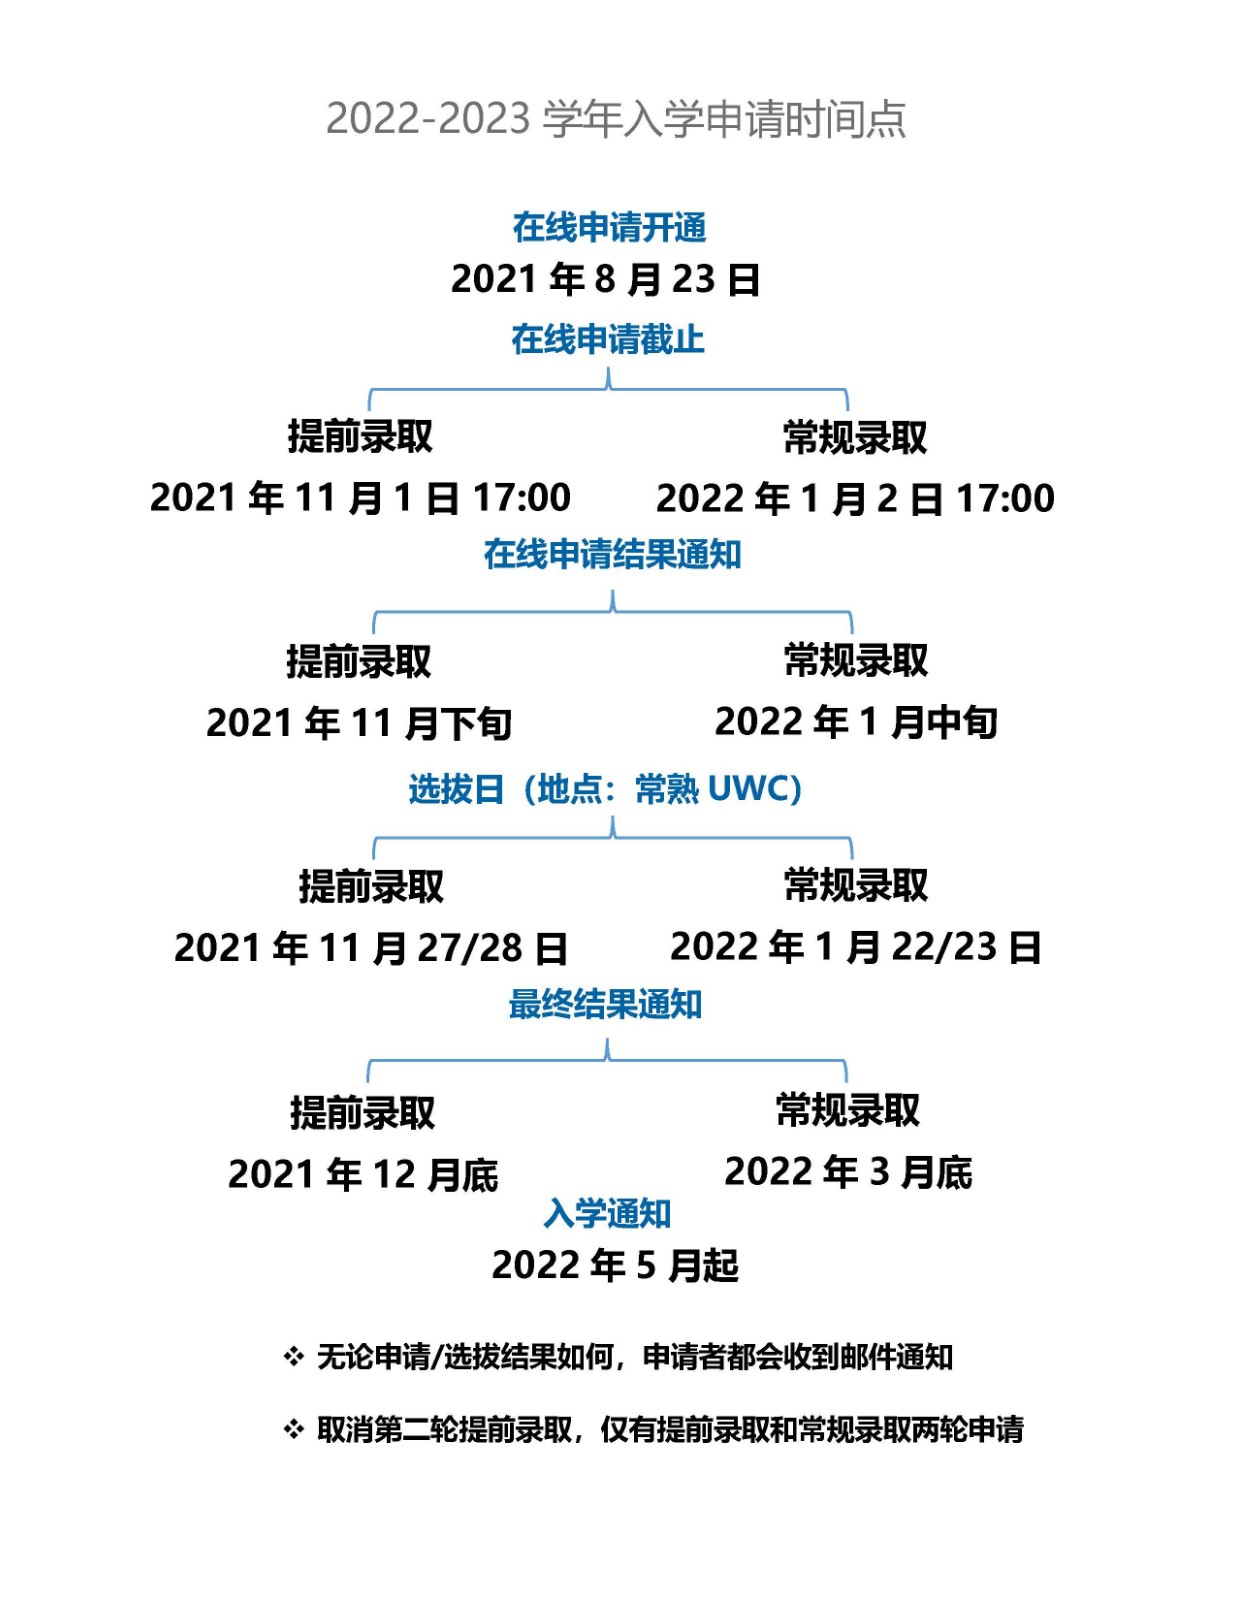 2022-2023 Timeline_Chinese.jpg